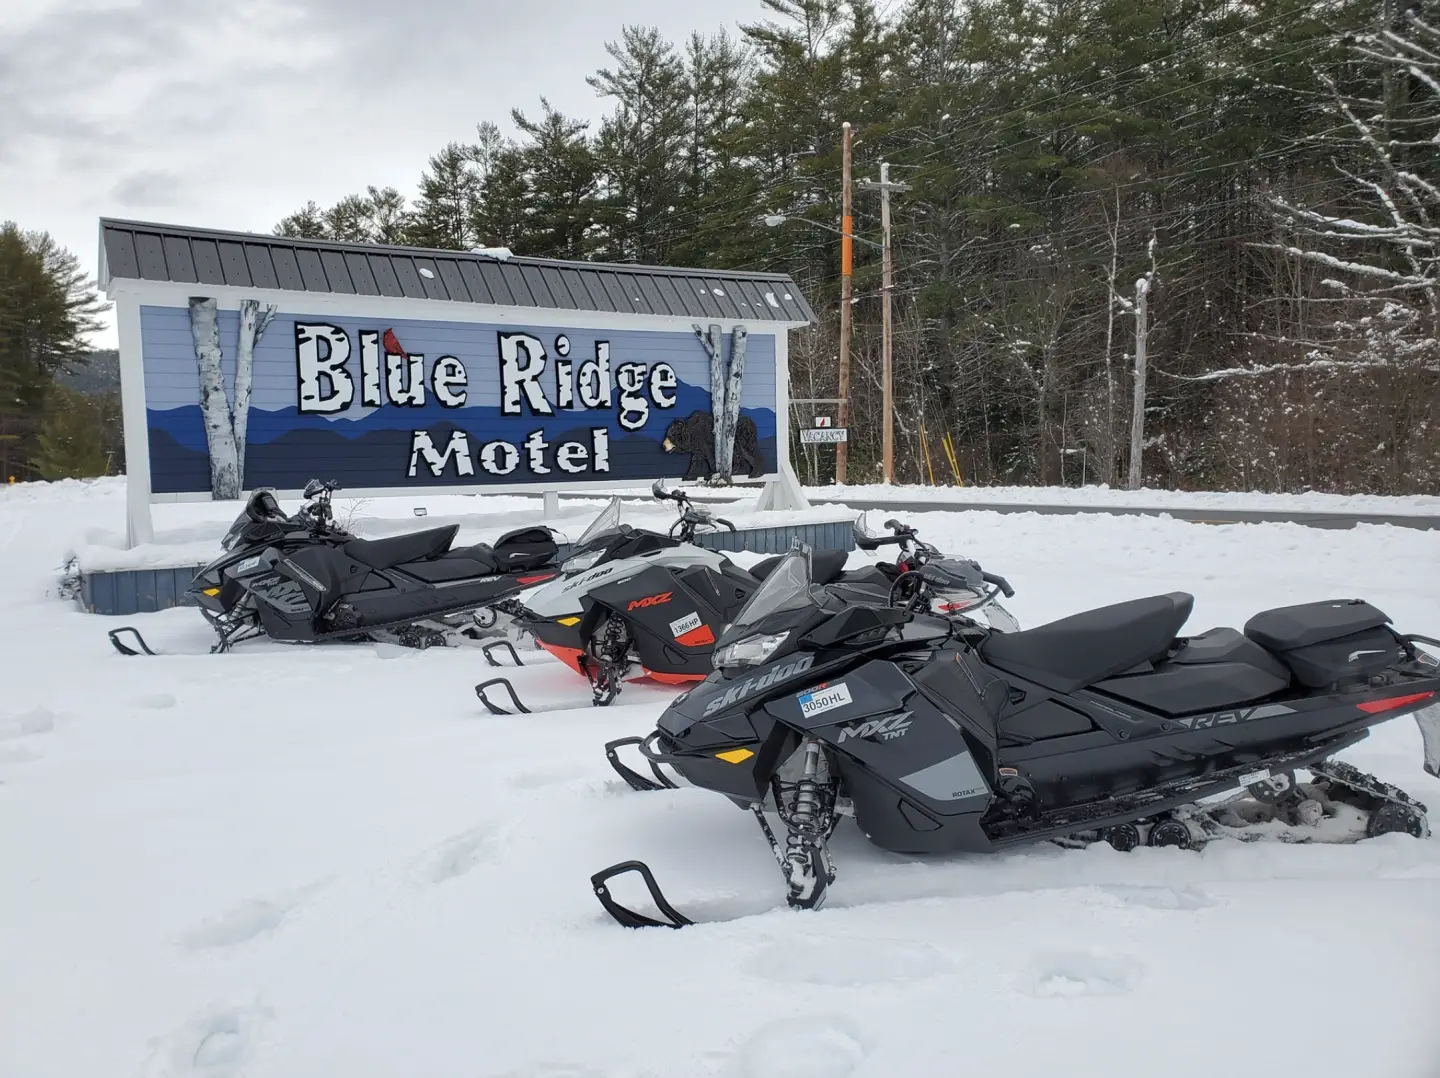 Blue Ridge Motel: Your Adirondack Haven for Adventure and Comfort